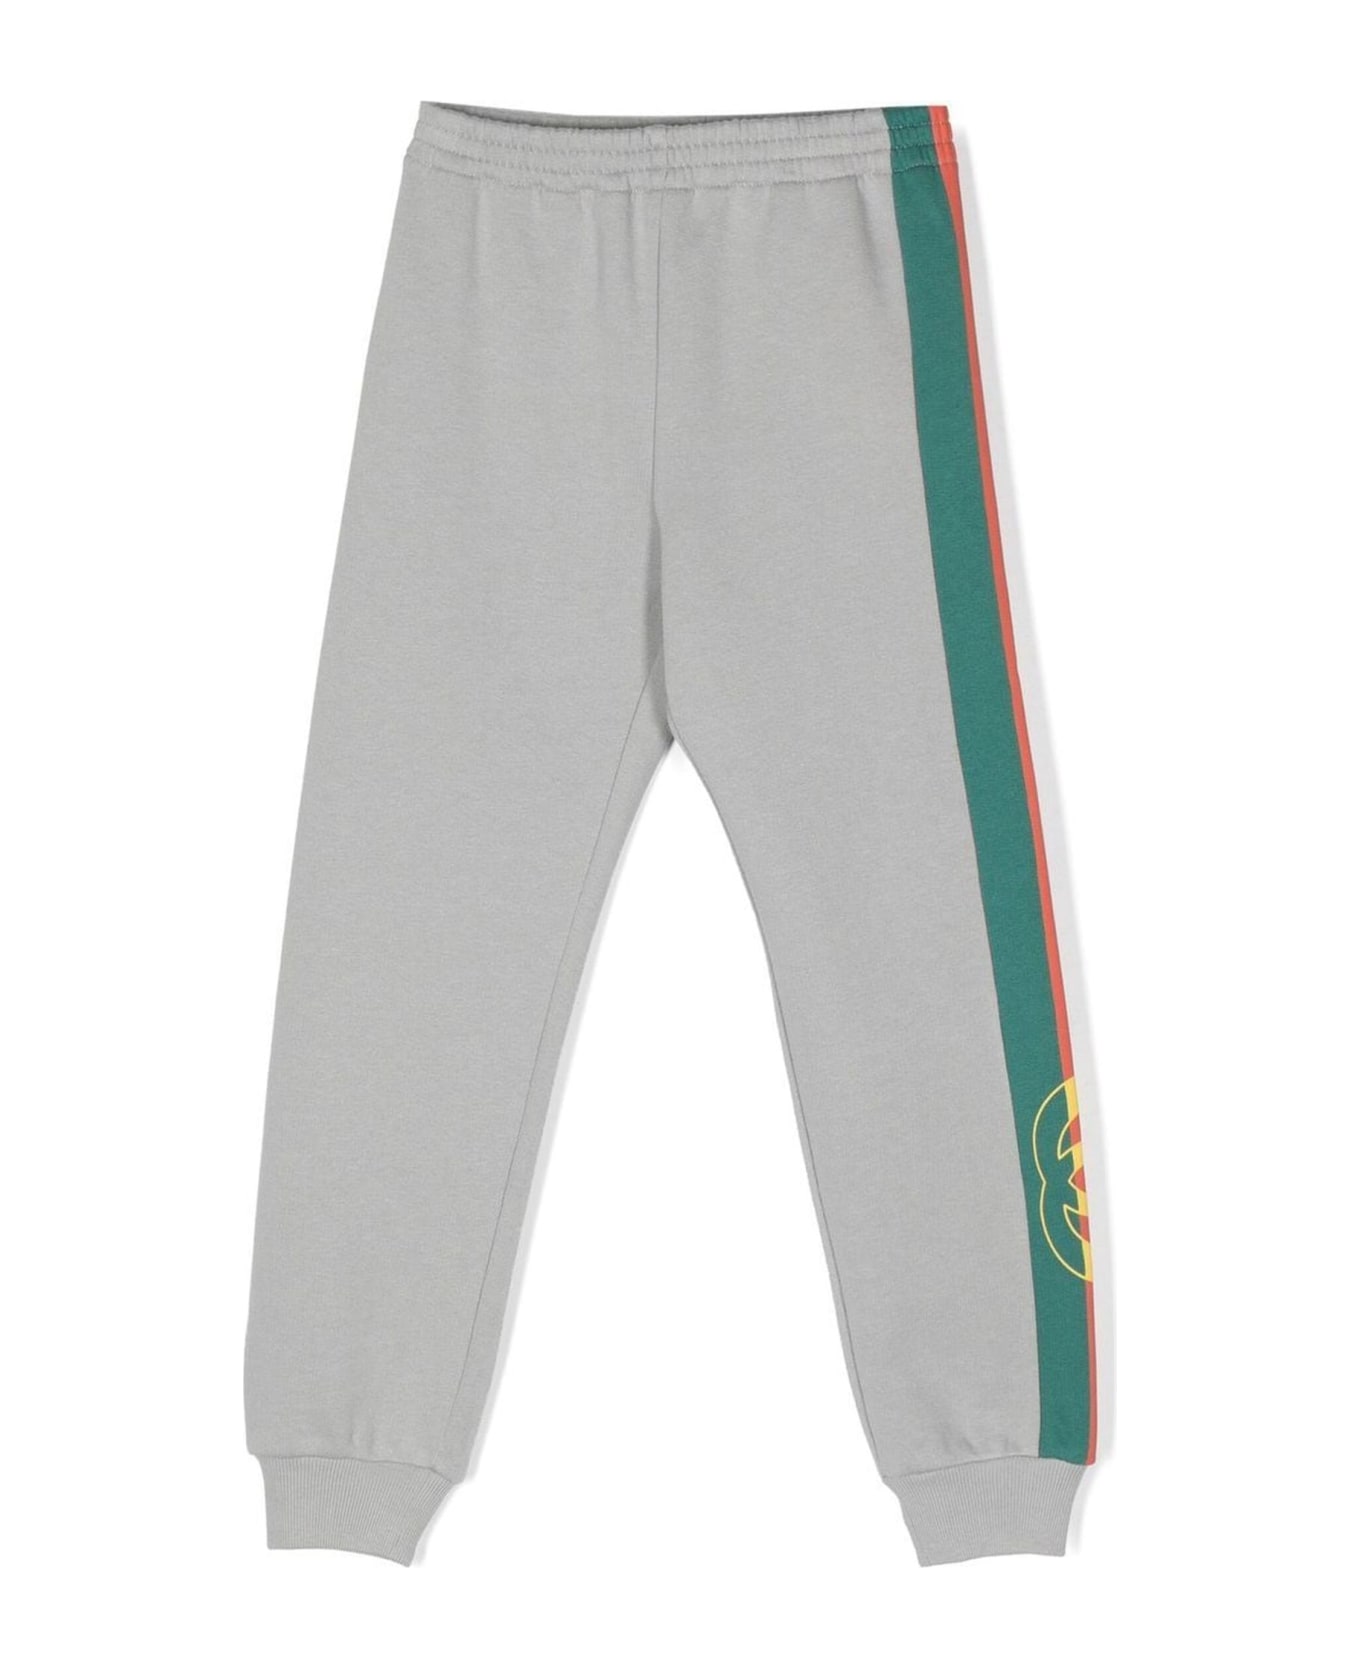 Gucci Grey Cotton Track Pants - Multicolor